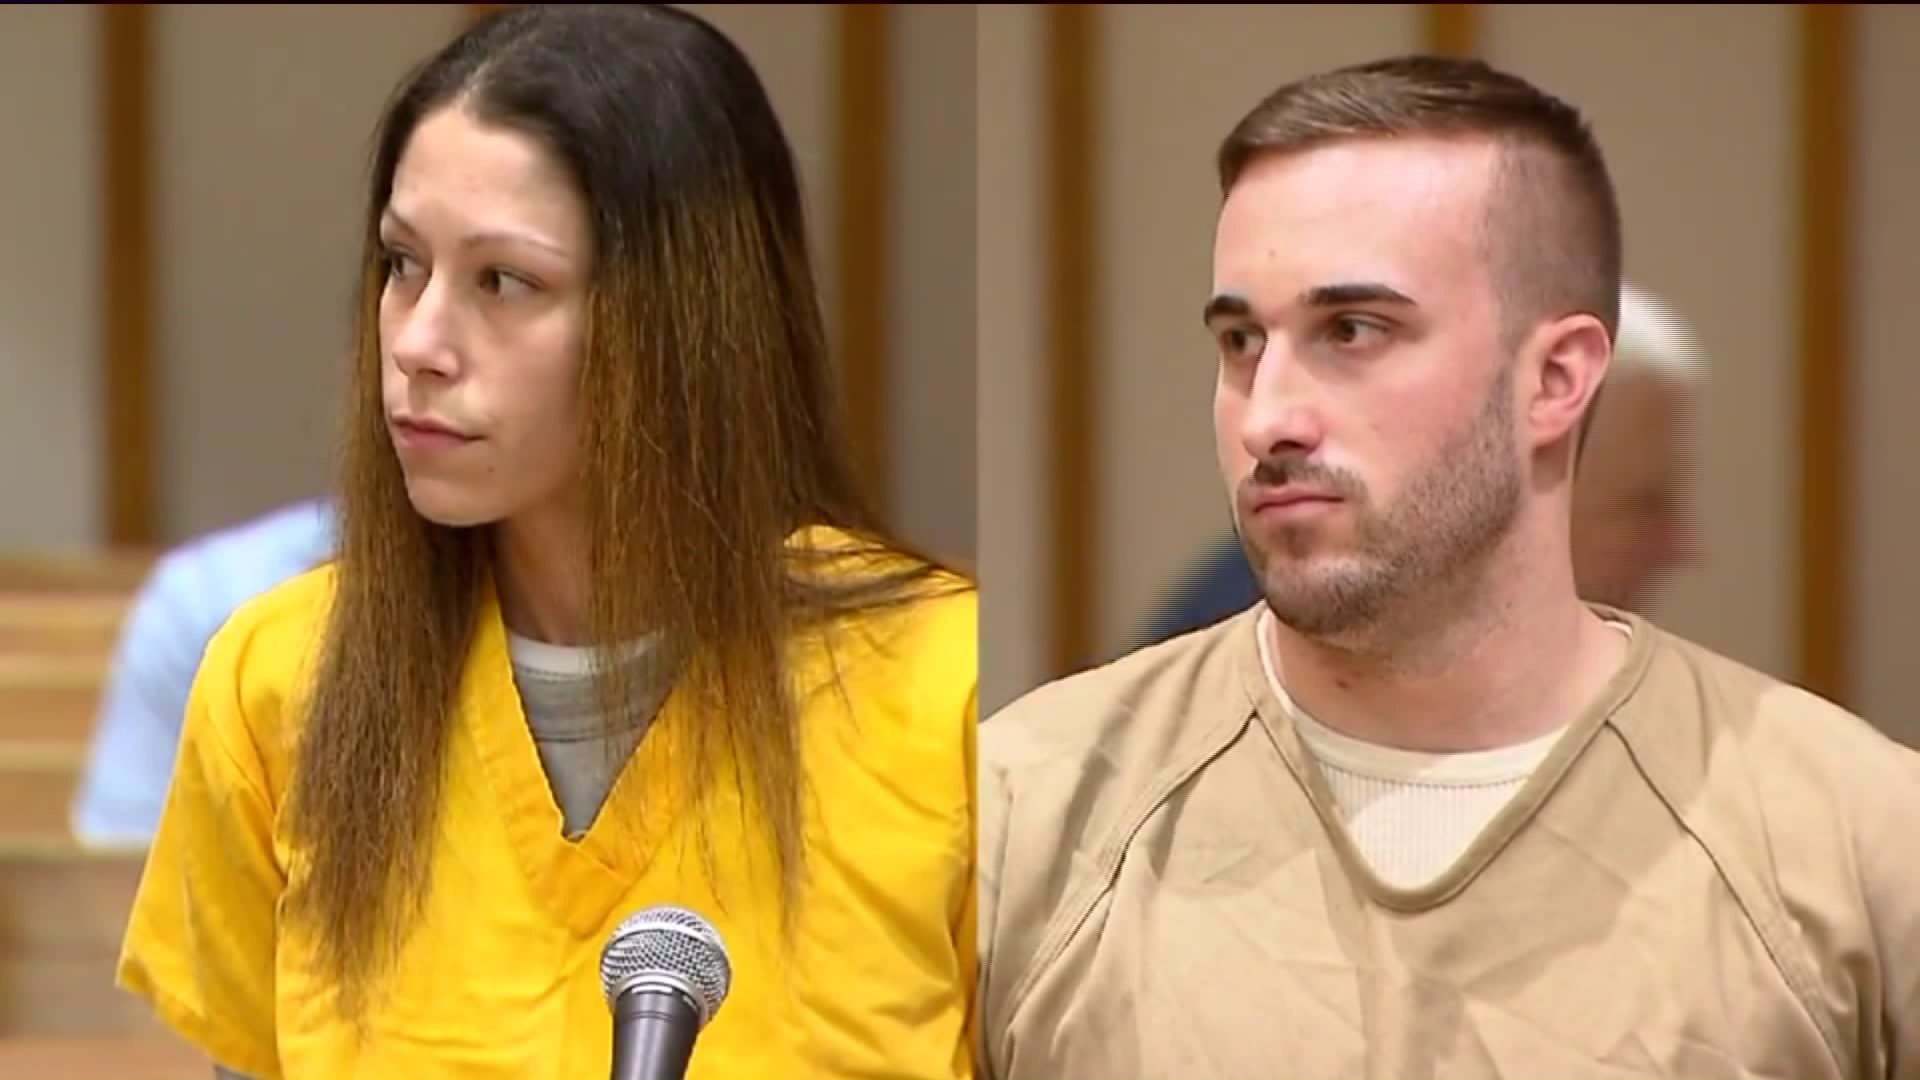 Girlfriend of alleged killer accepts plea deal